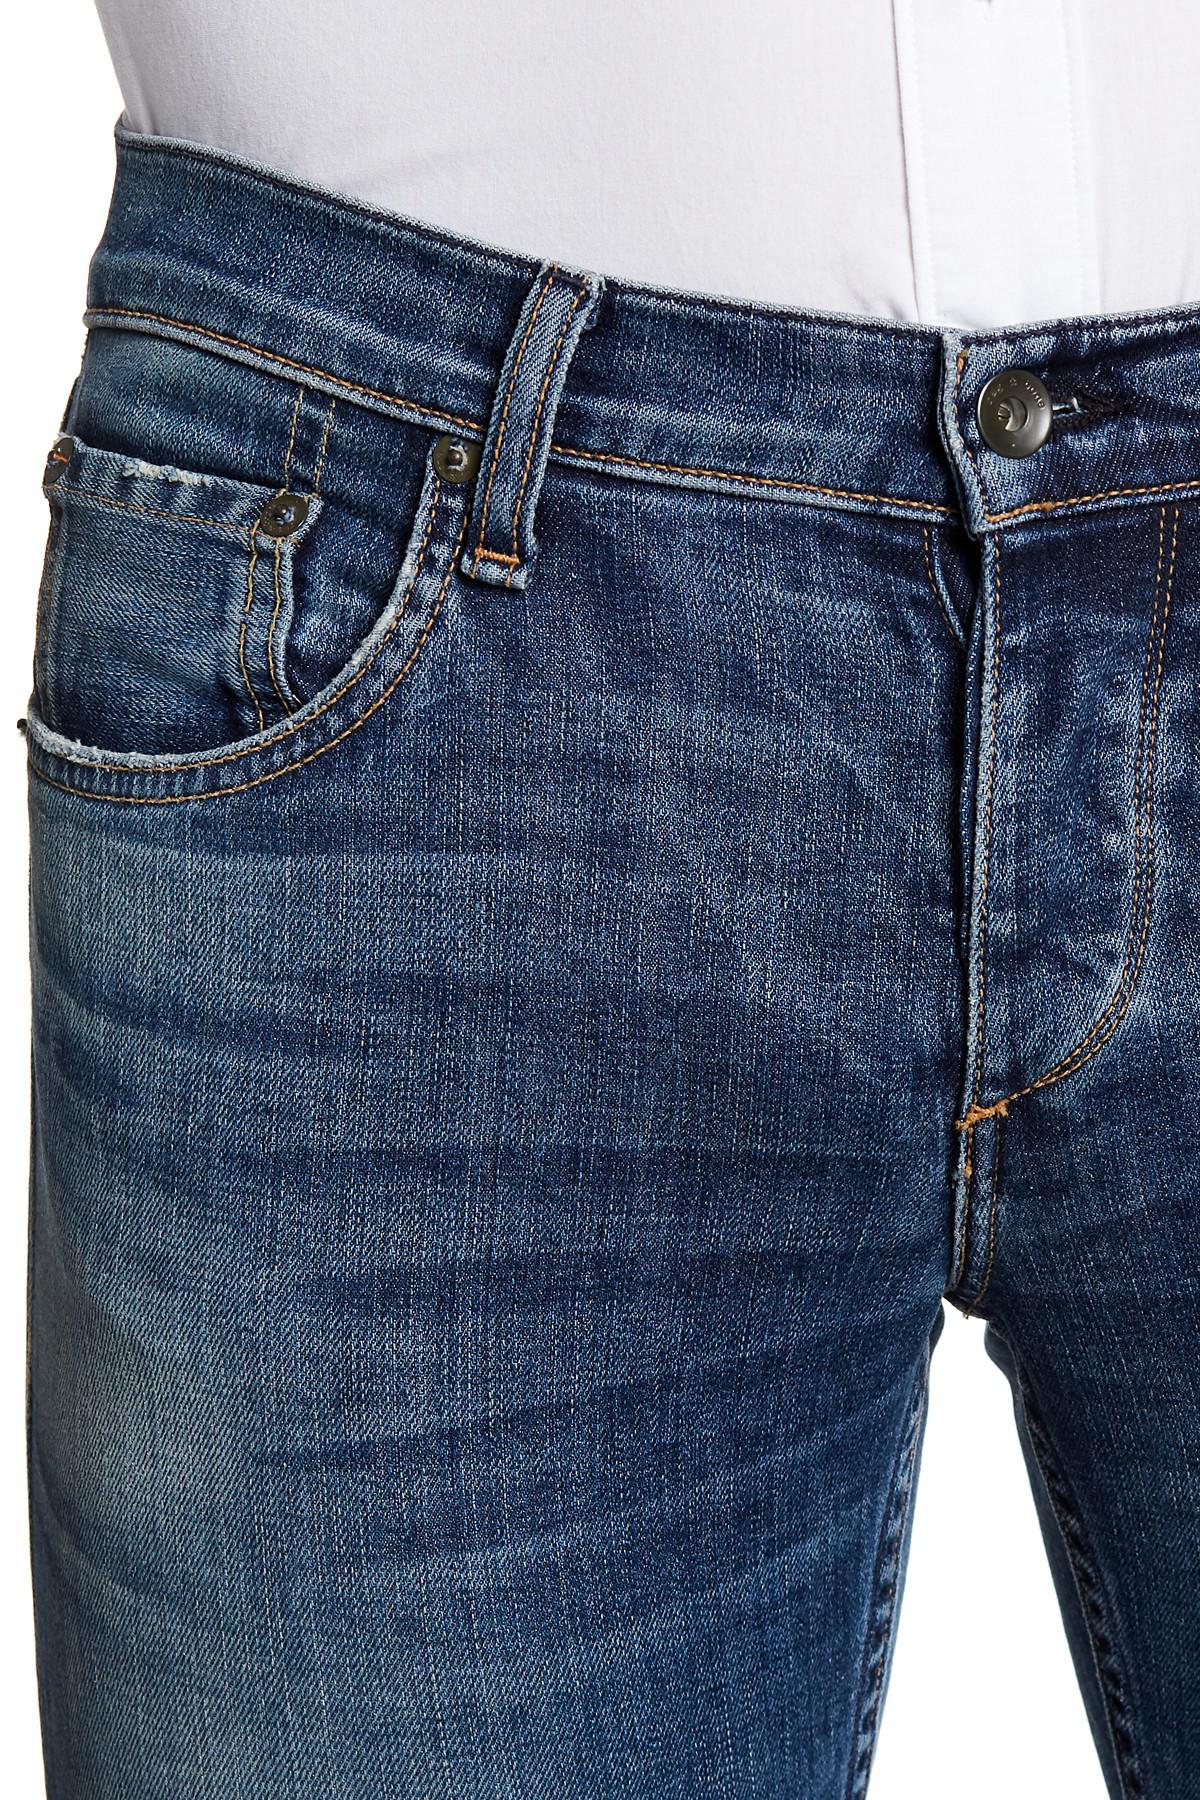 Lyst - Rag & Bone Slim Fit Jeans in Blue for Men